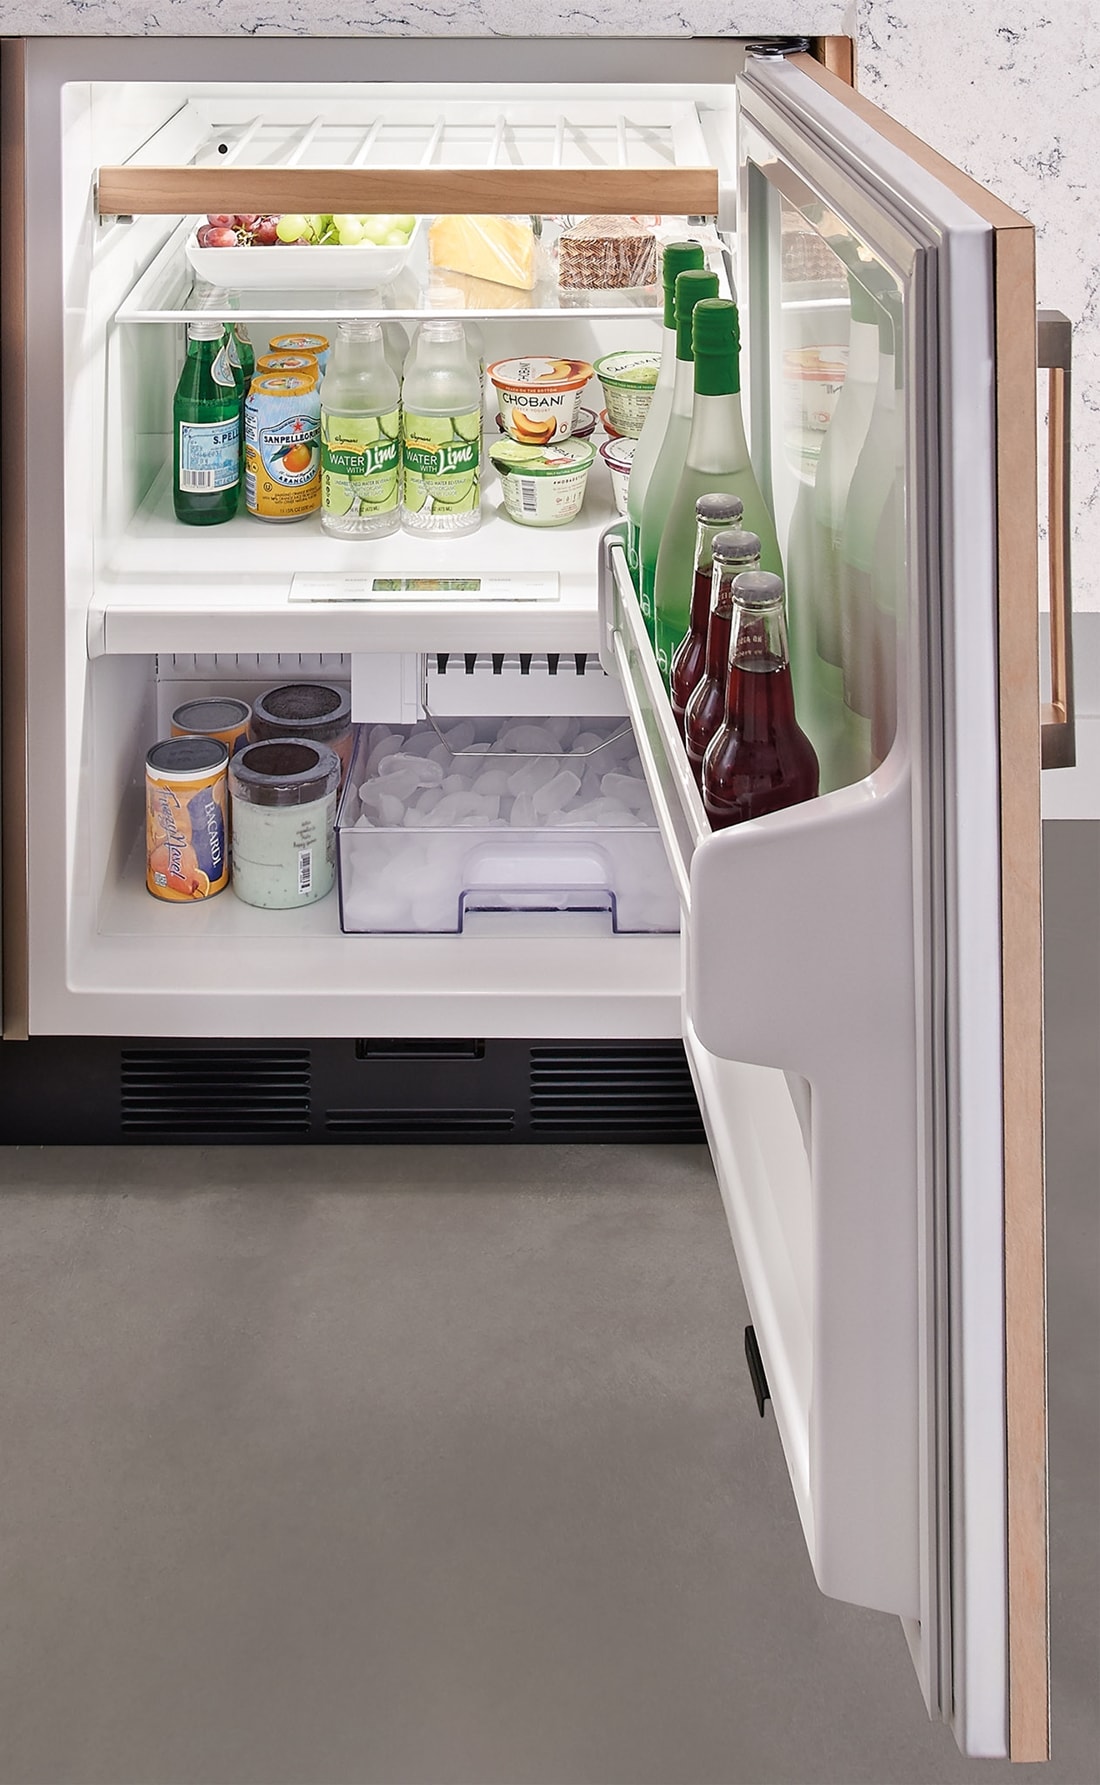 Sub Zero 24 Undercounter Refrigerator Freezer With Ice Maker